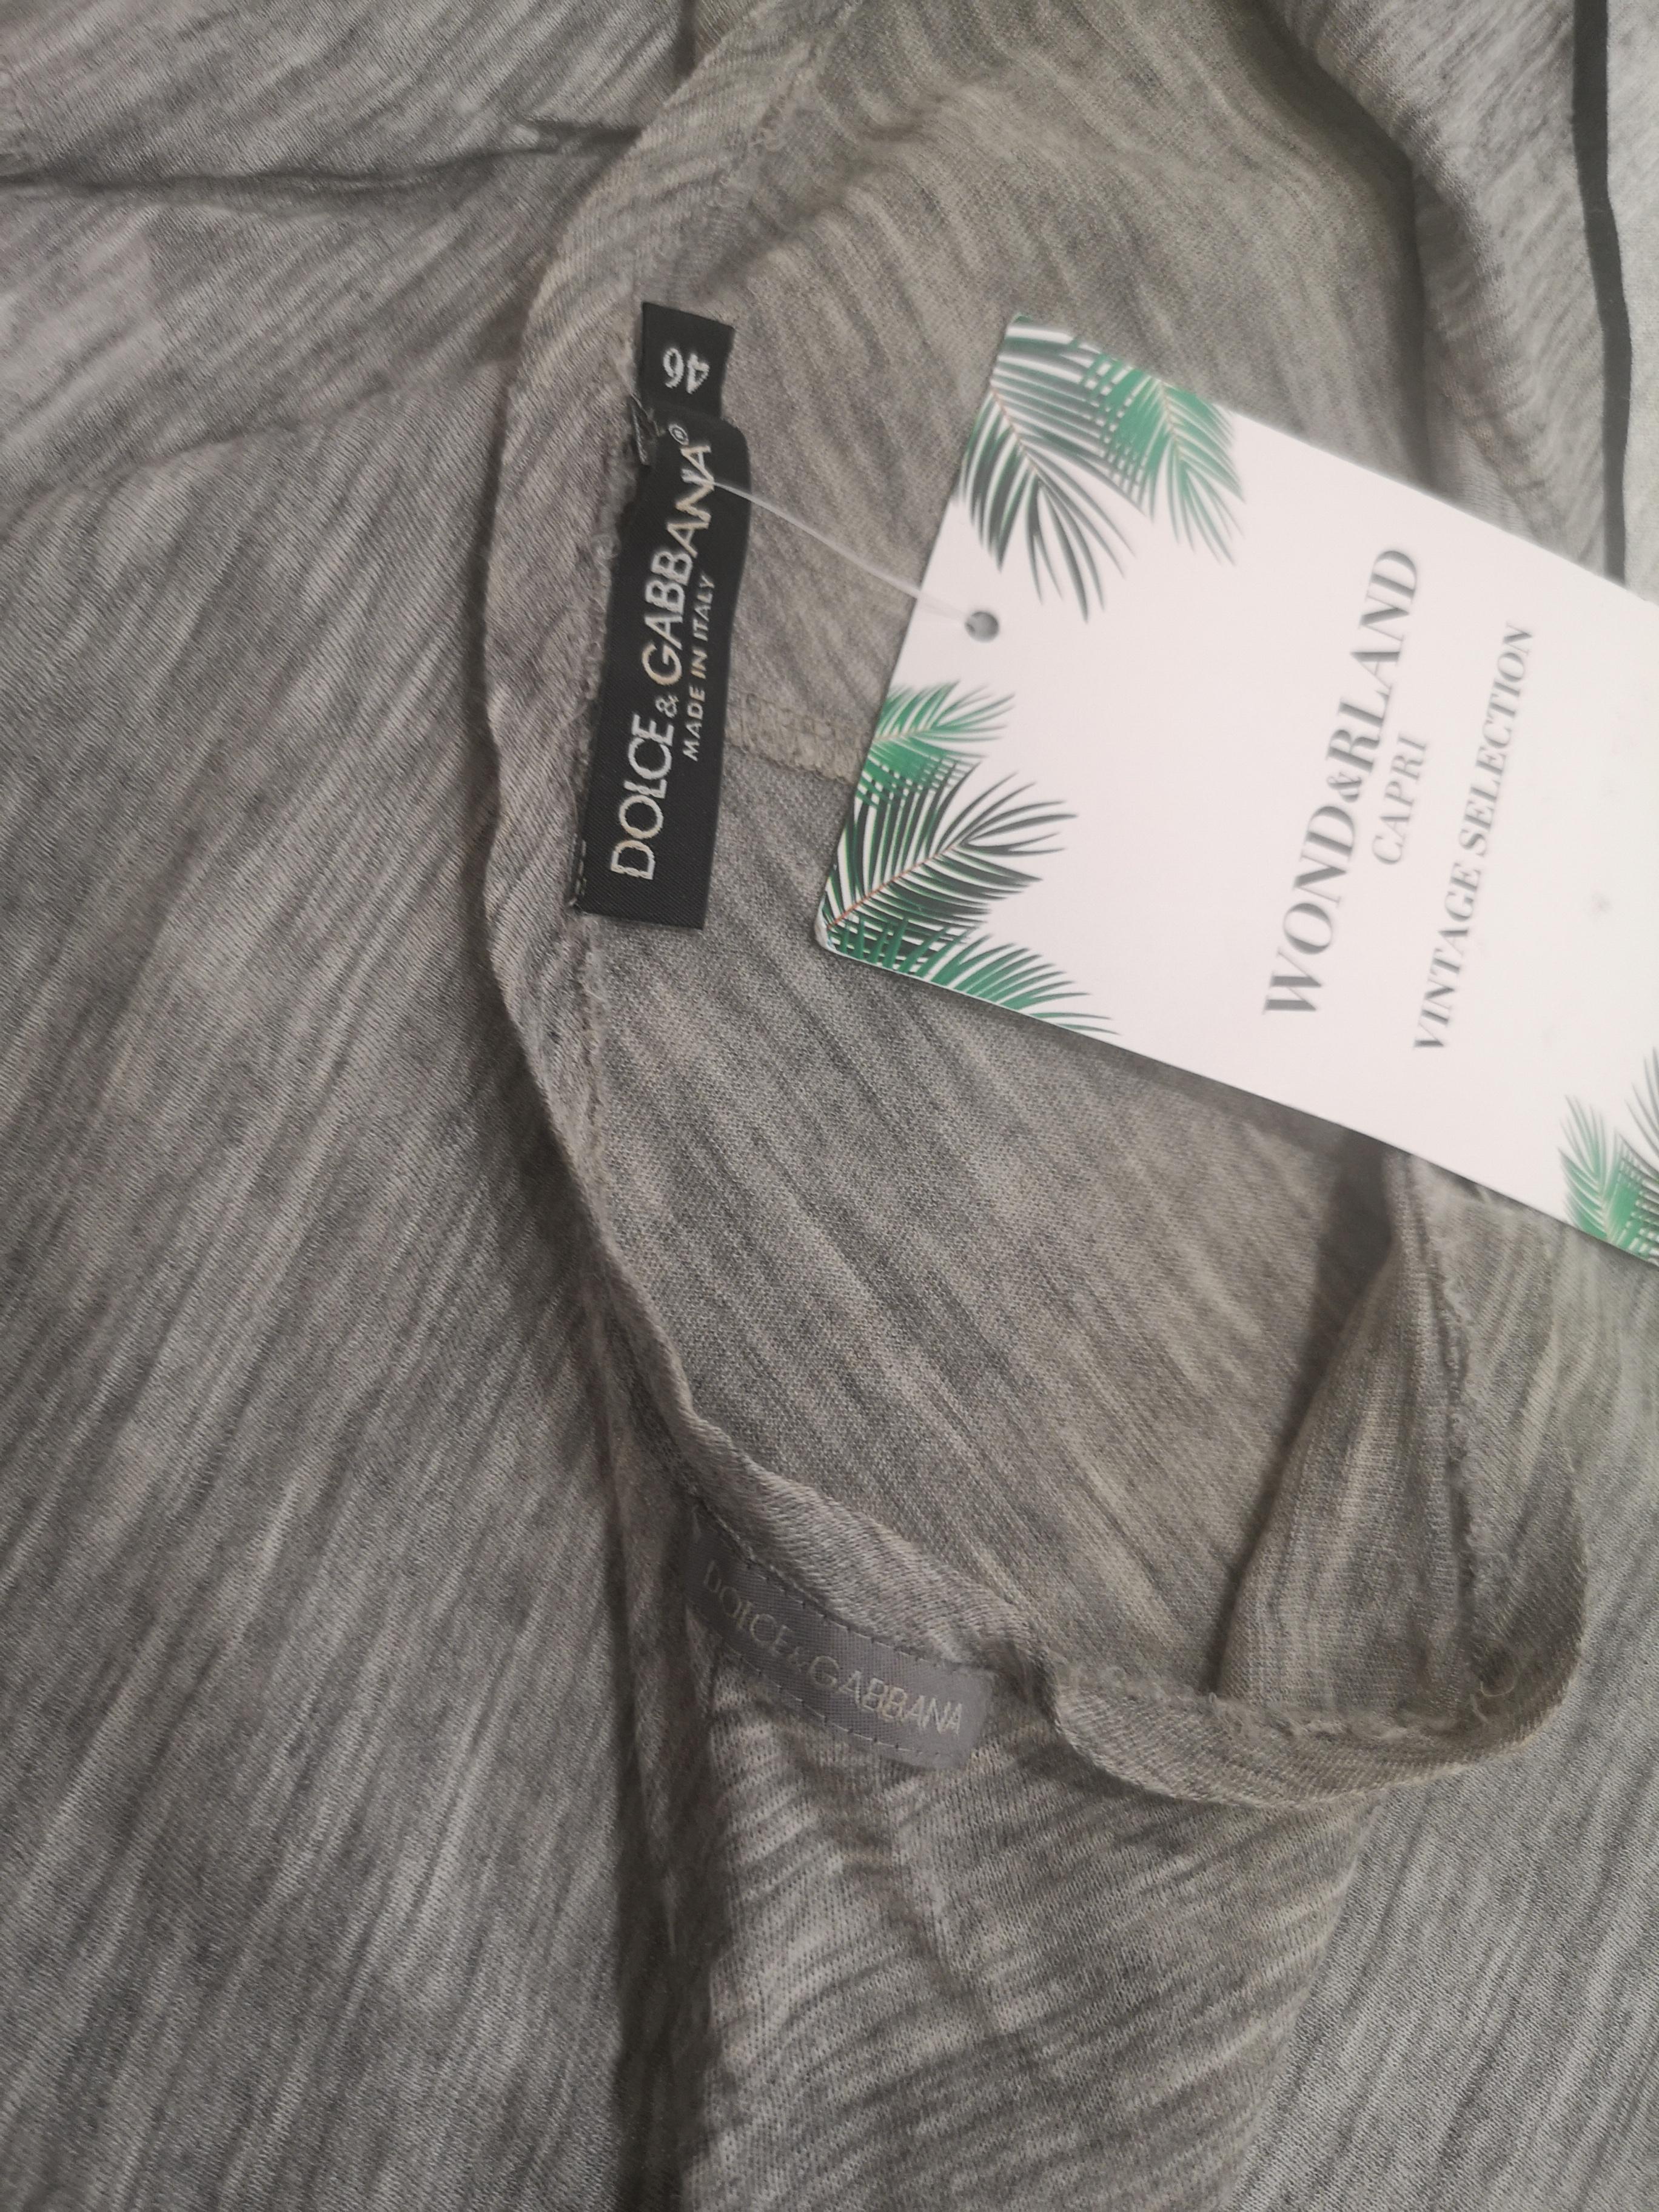 Dolce & Gabbana Steve McQueen grey t-shirt In Excellent Condition In Capri, IT